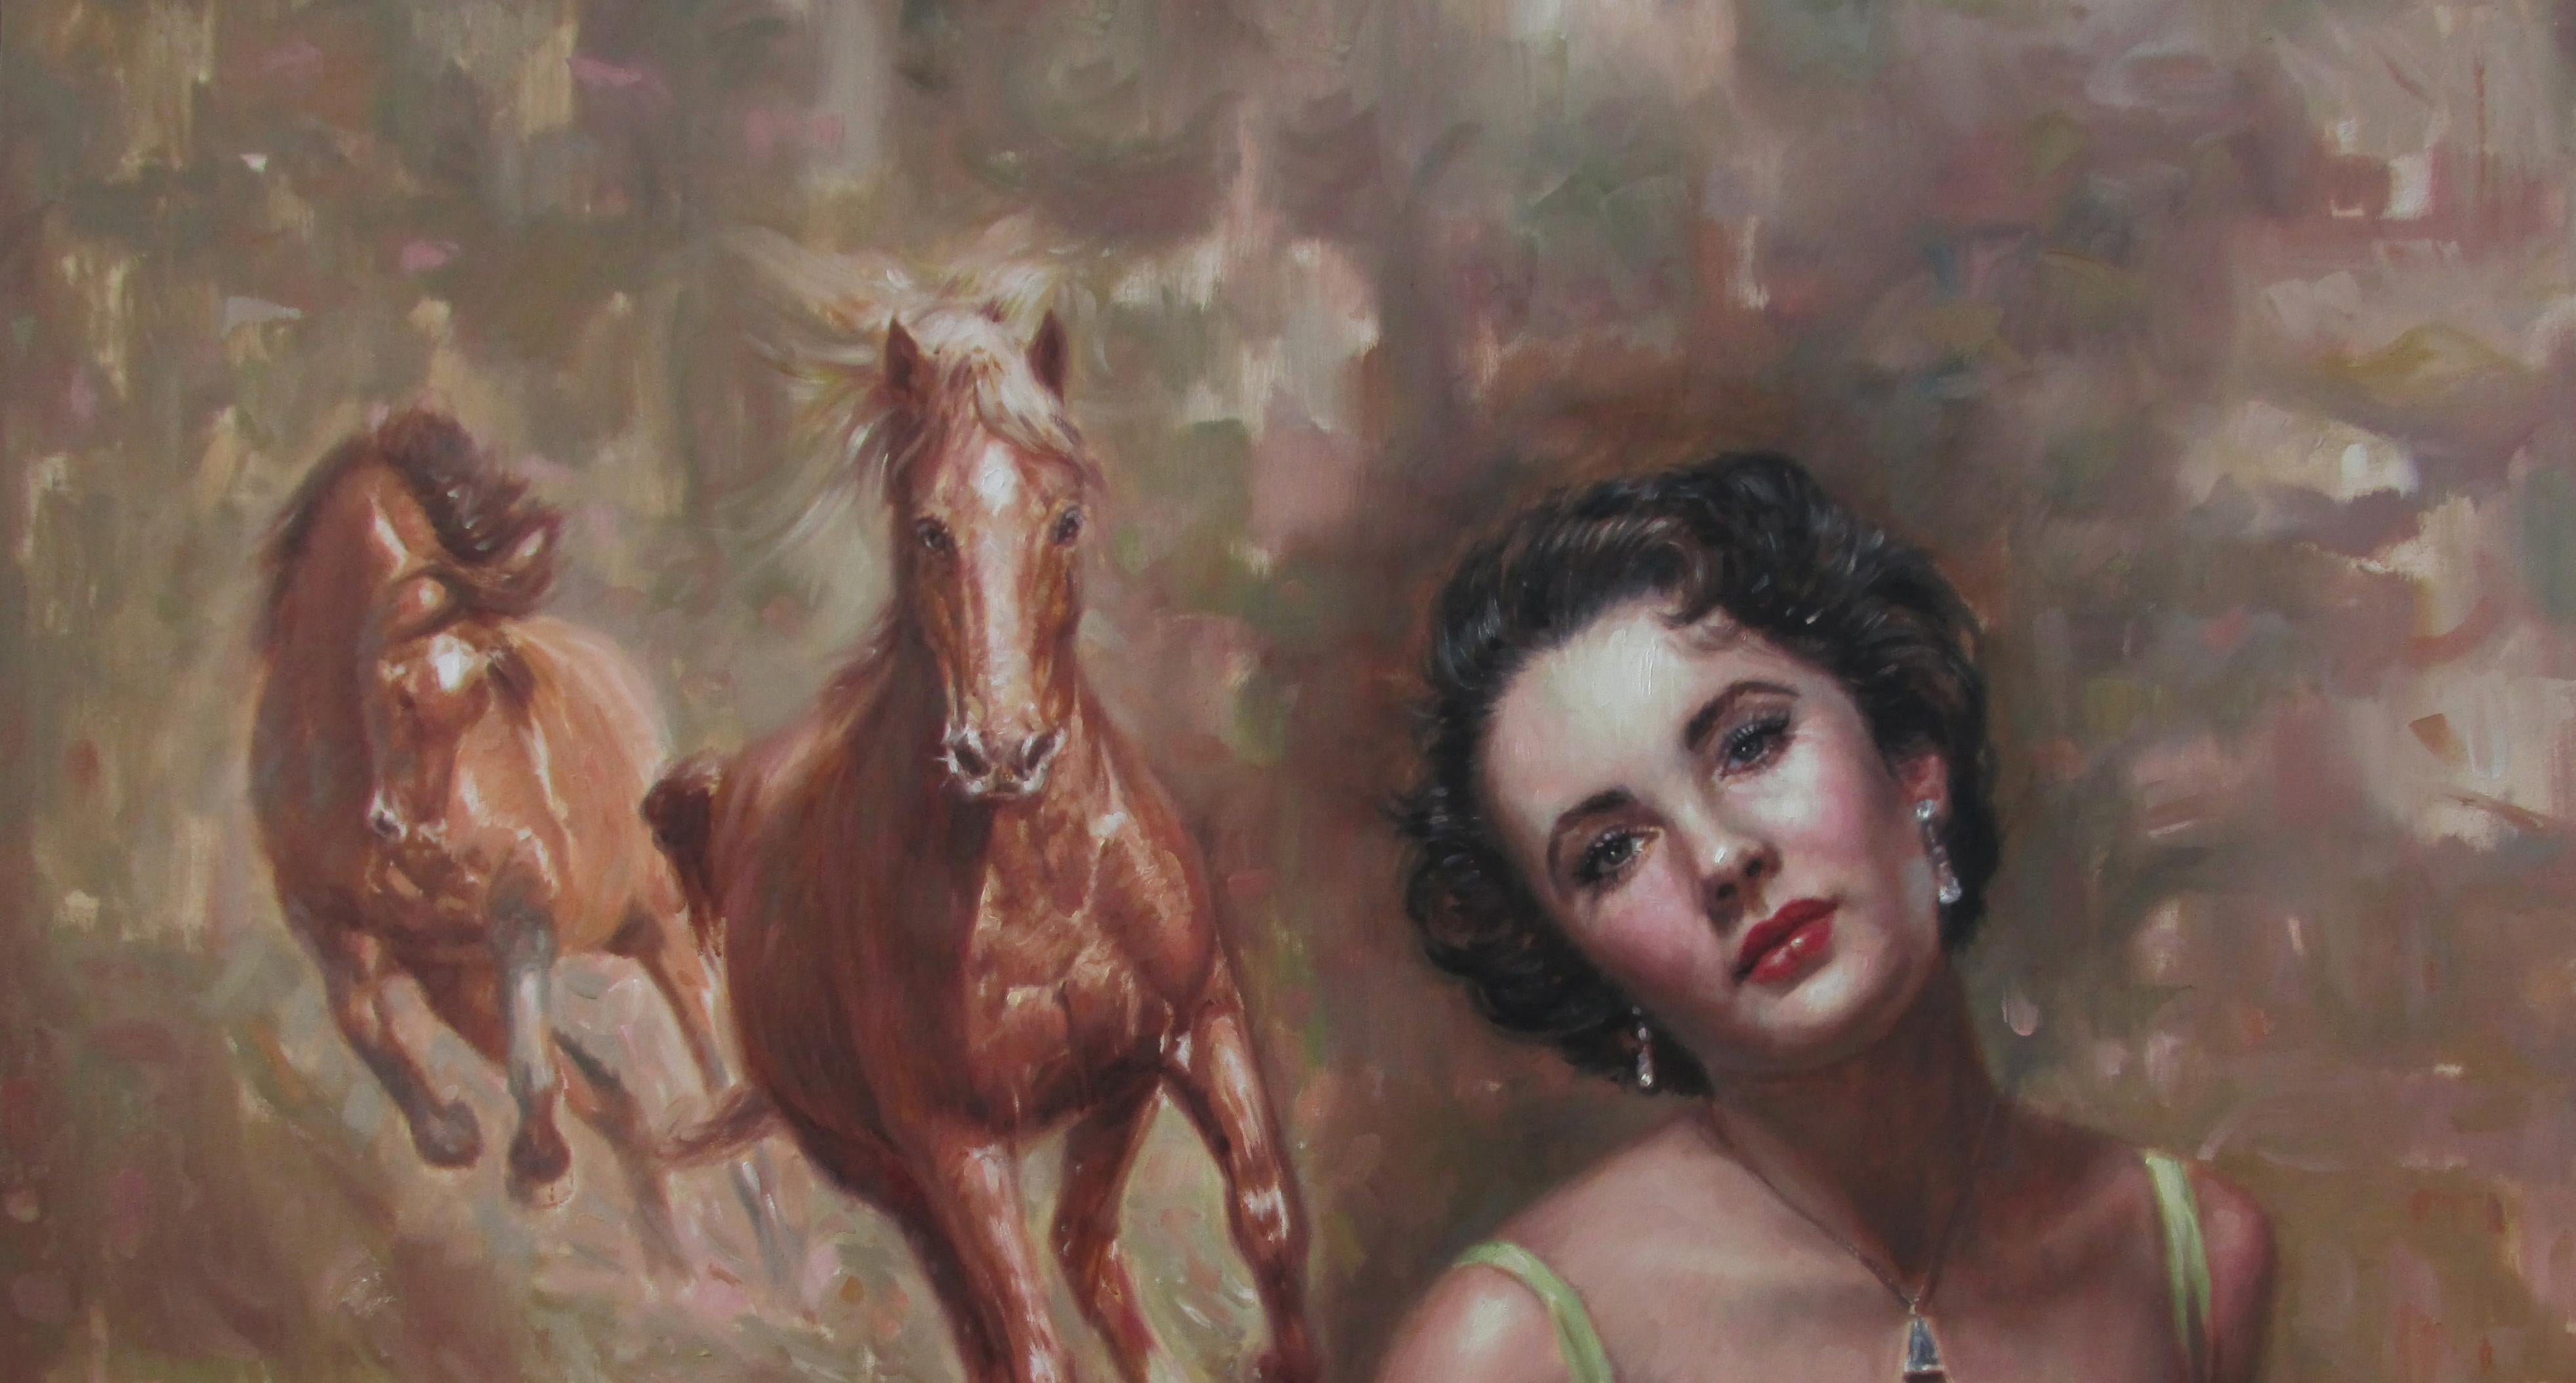   Galopando-Galloping Cuban Figurative Young Liz Taylor Horses Giant Marfa Oil est une oeuvre de l'artiste cubain  ANDRE  RETAMERO VALENZUELA . Andre Retamero est né à Cuba en 1970. Il s'agit d'une peinture intitulée   Gallopando-Galloping utilisant